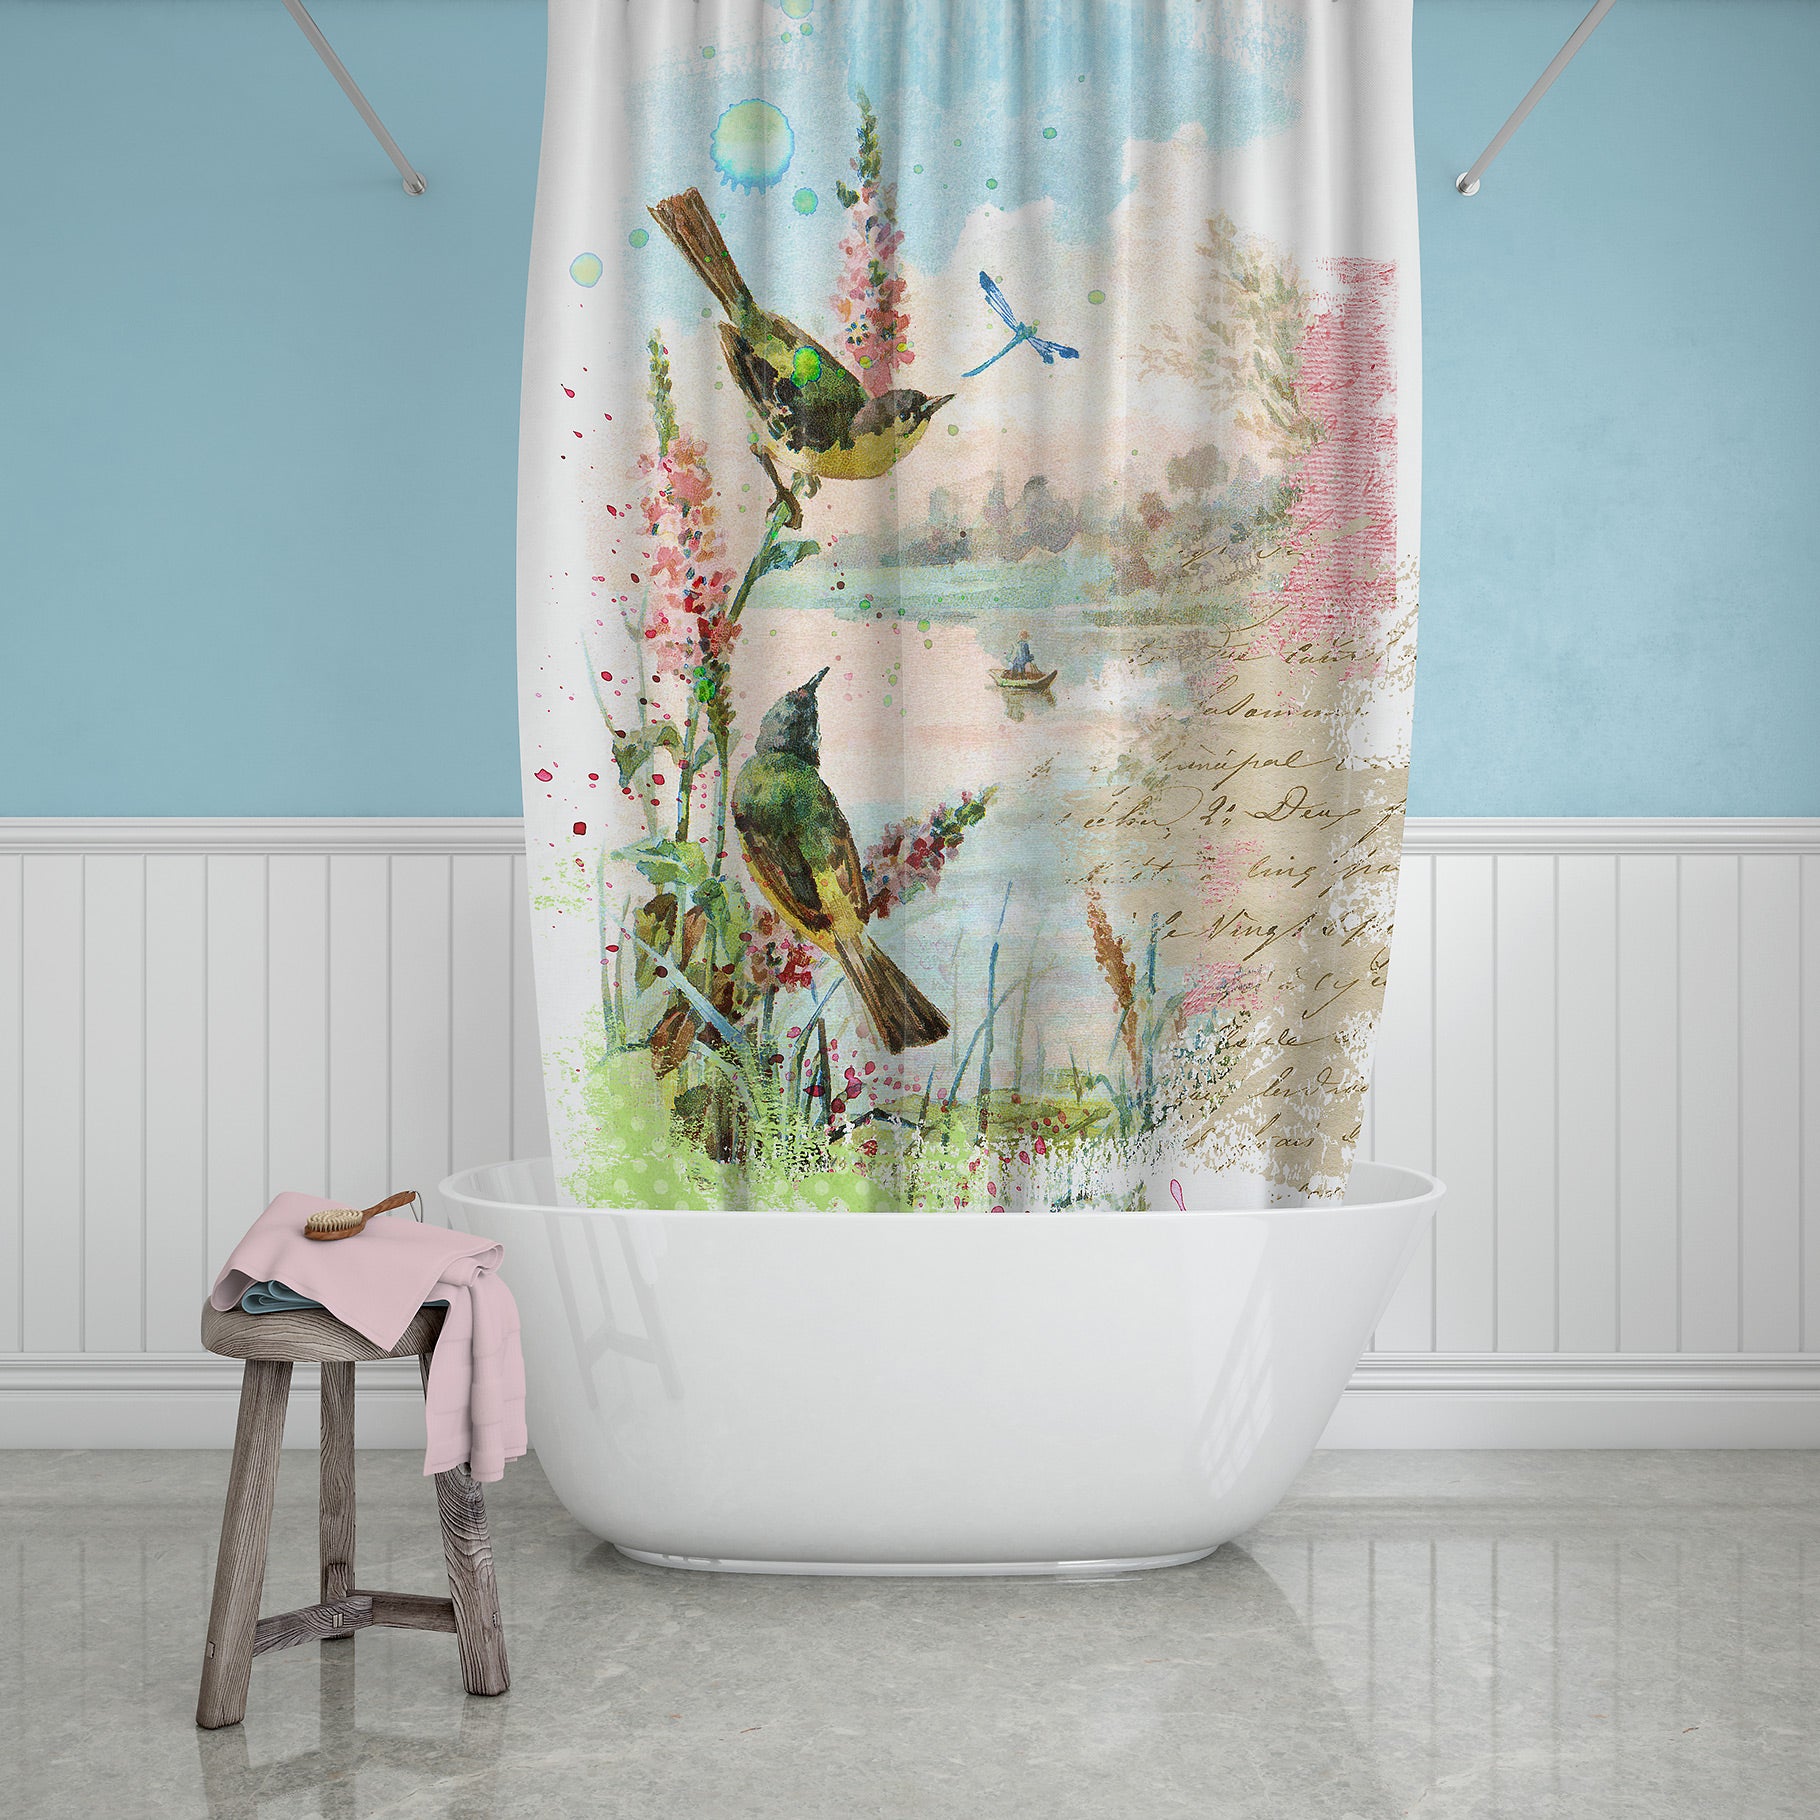 Shower curtain design mockup with a vintage scenic bird illustration design.